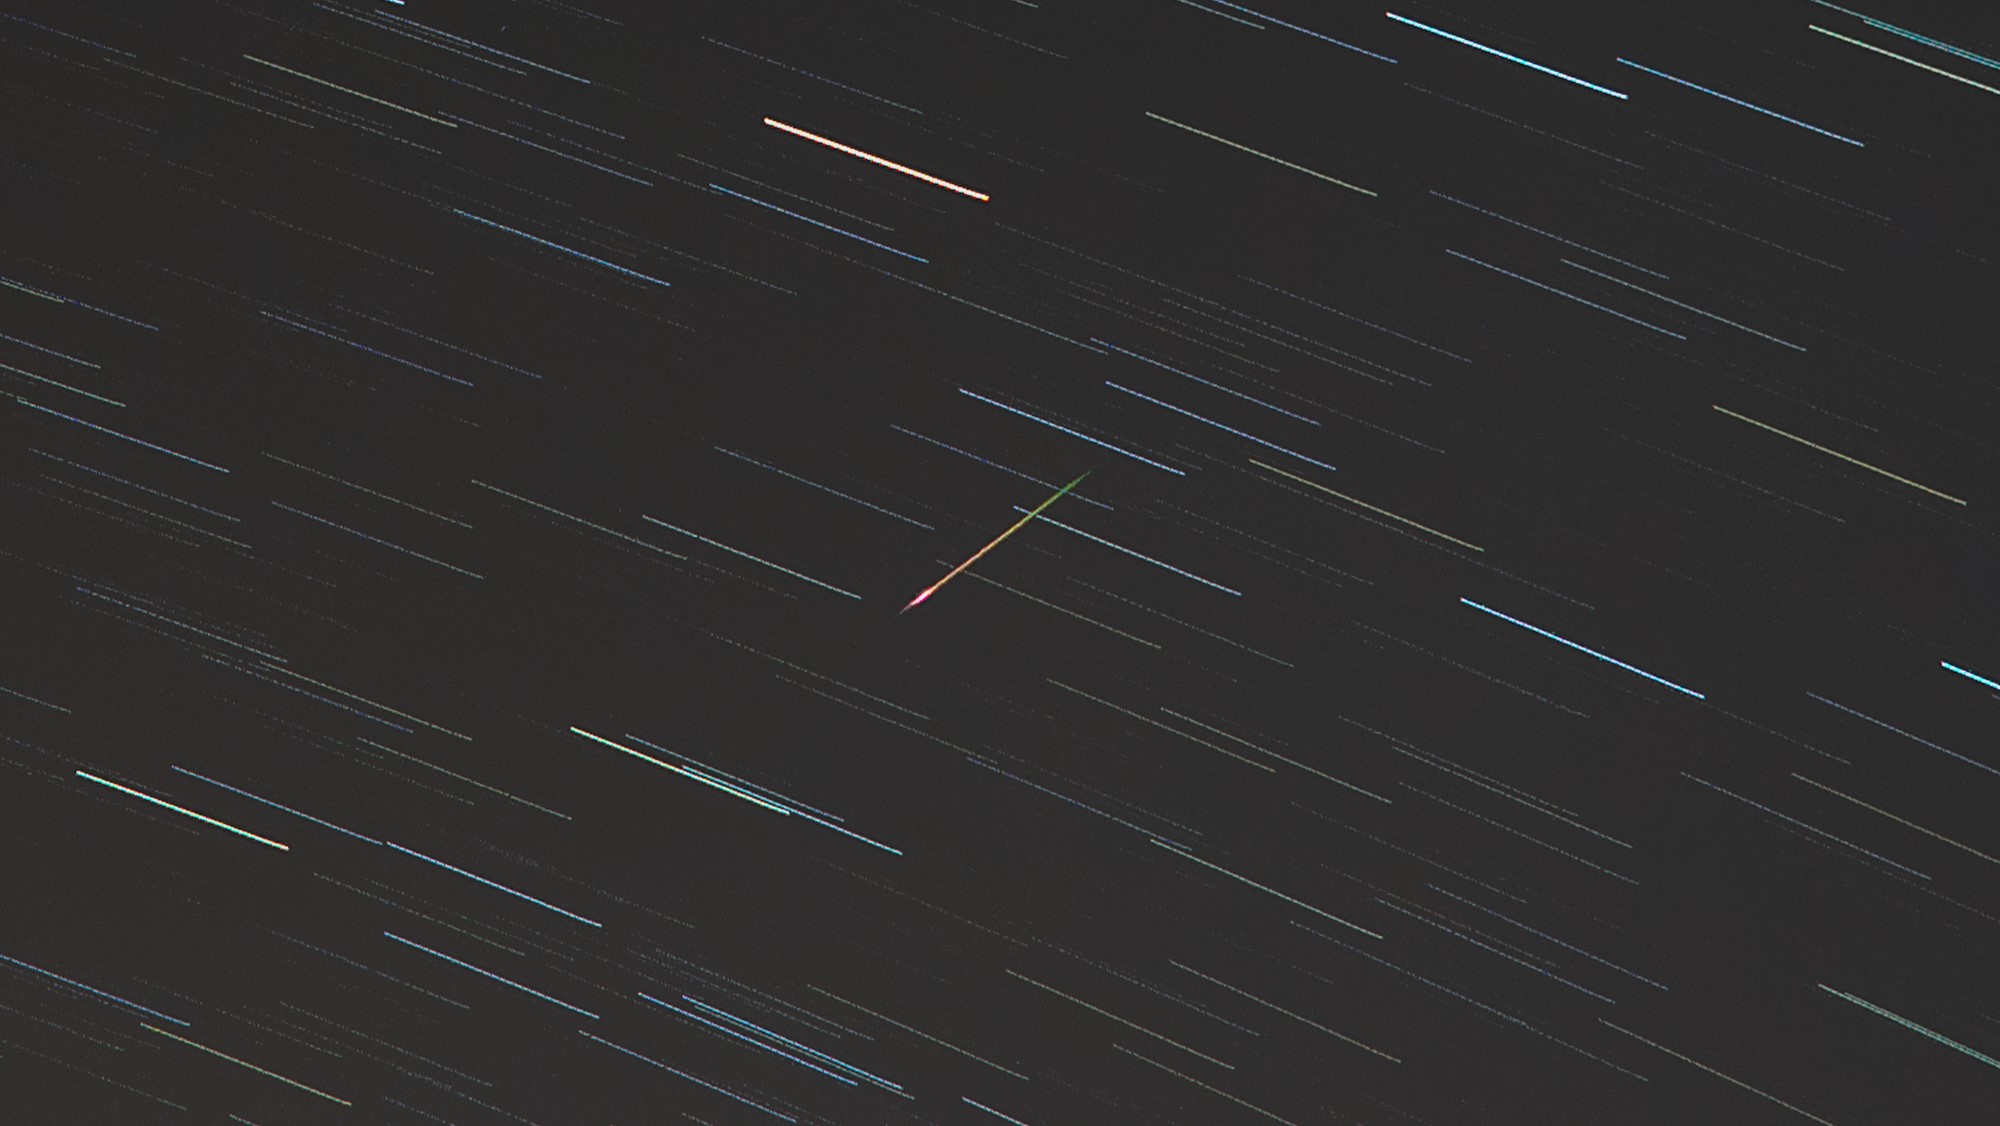 A meteor from the Eta Aquarids streaks through the night sky.